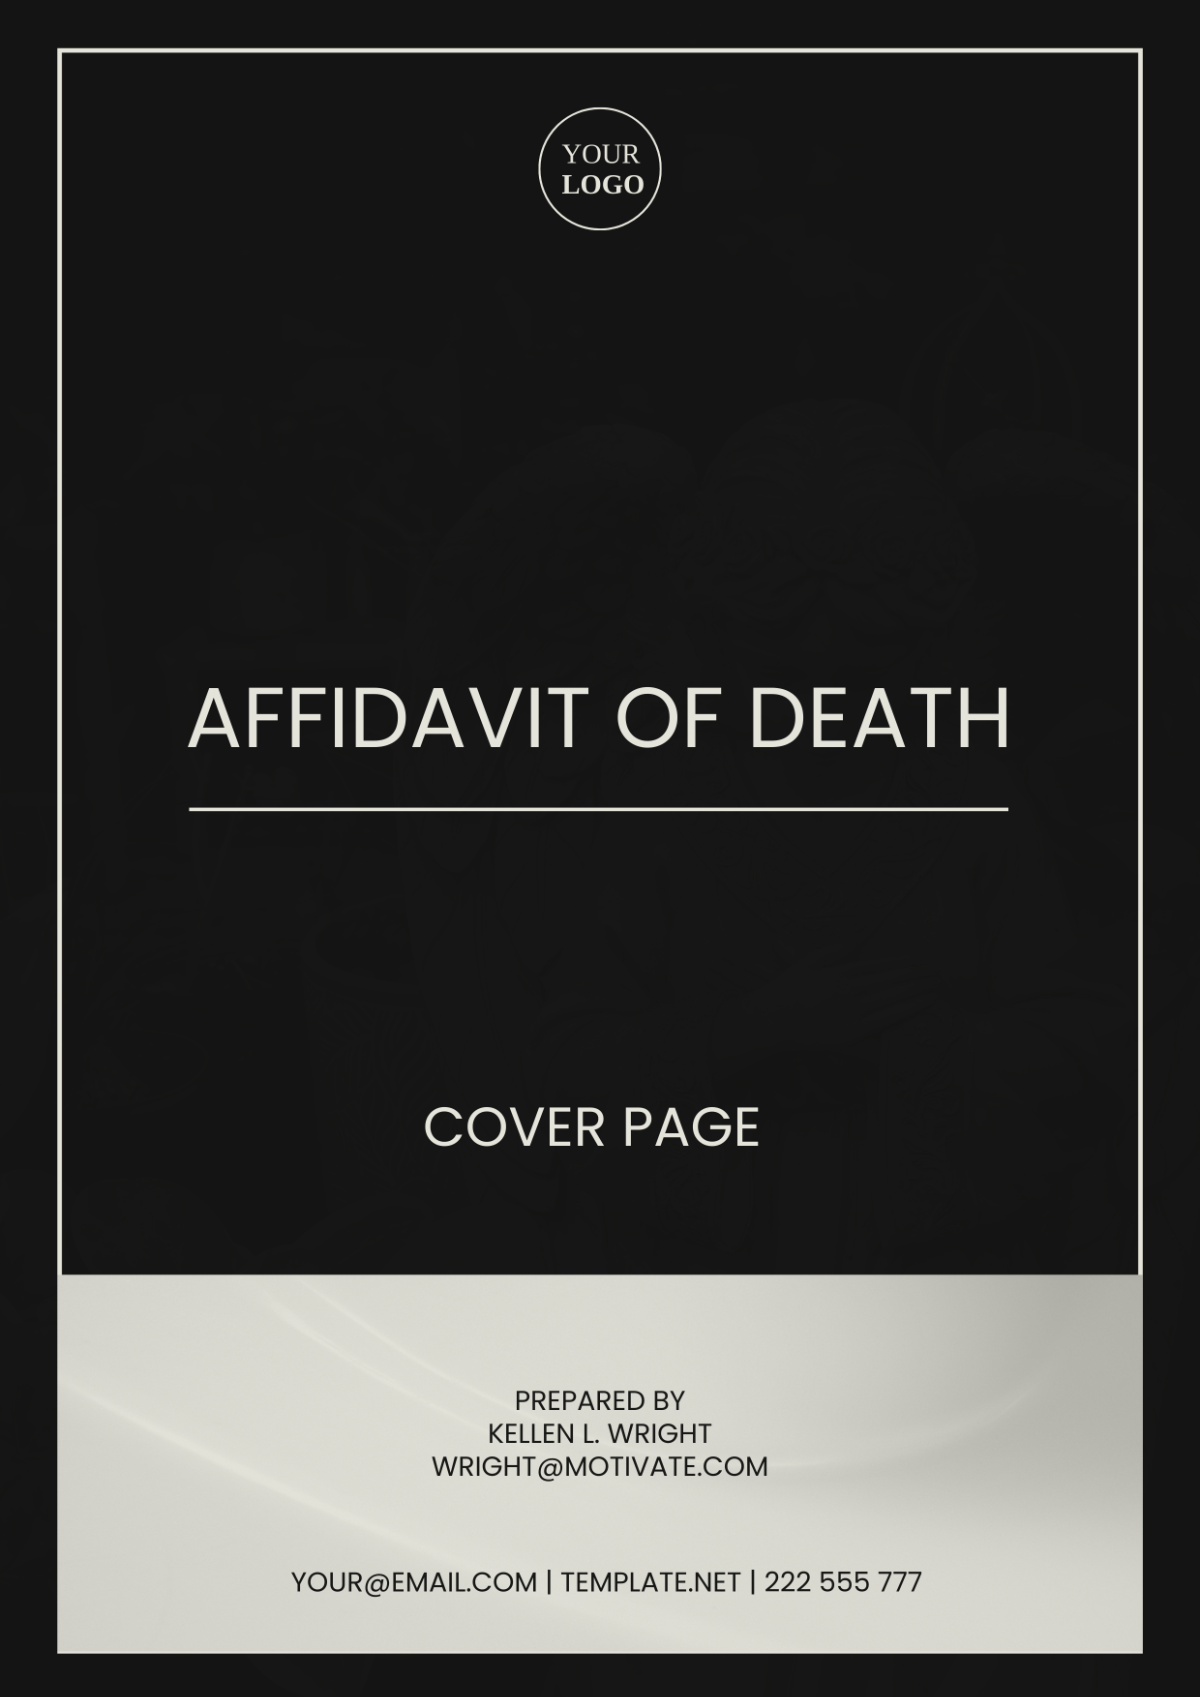 Affidavit of Death Cover Page